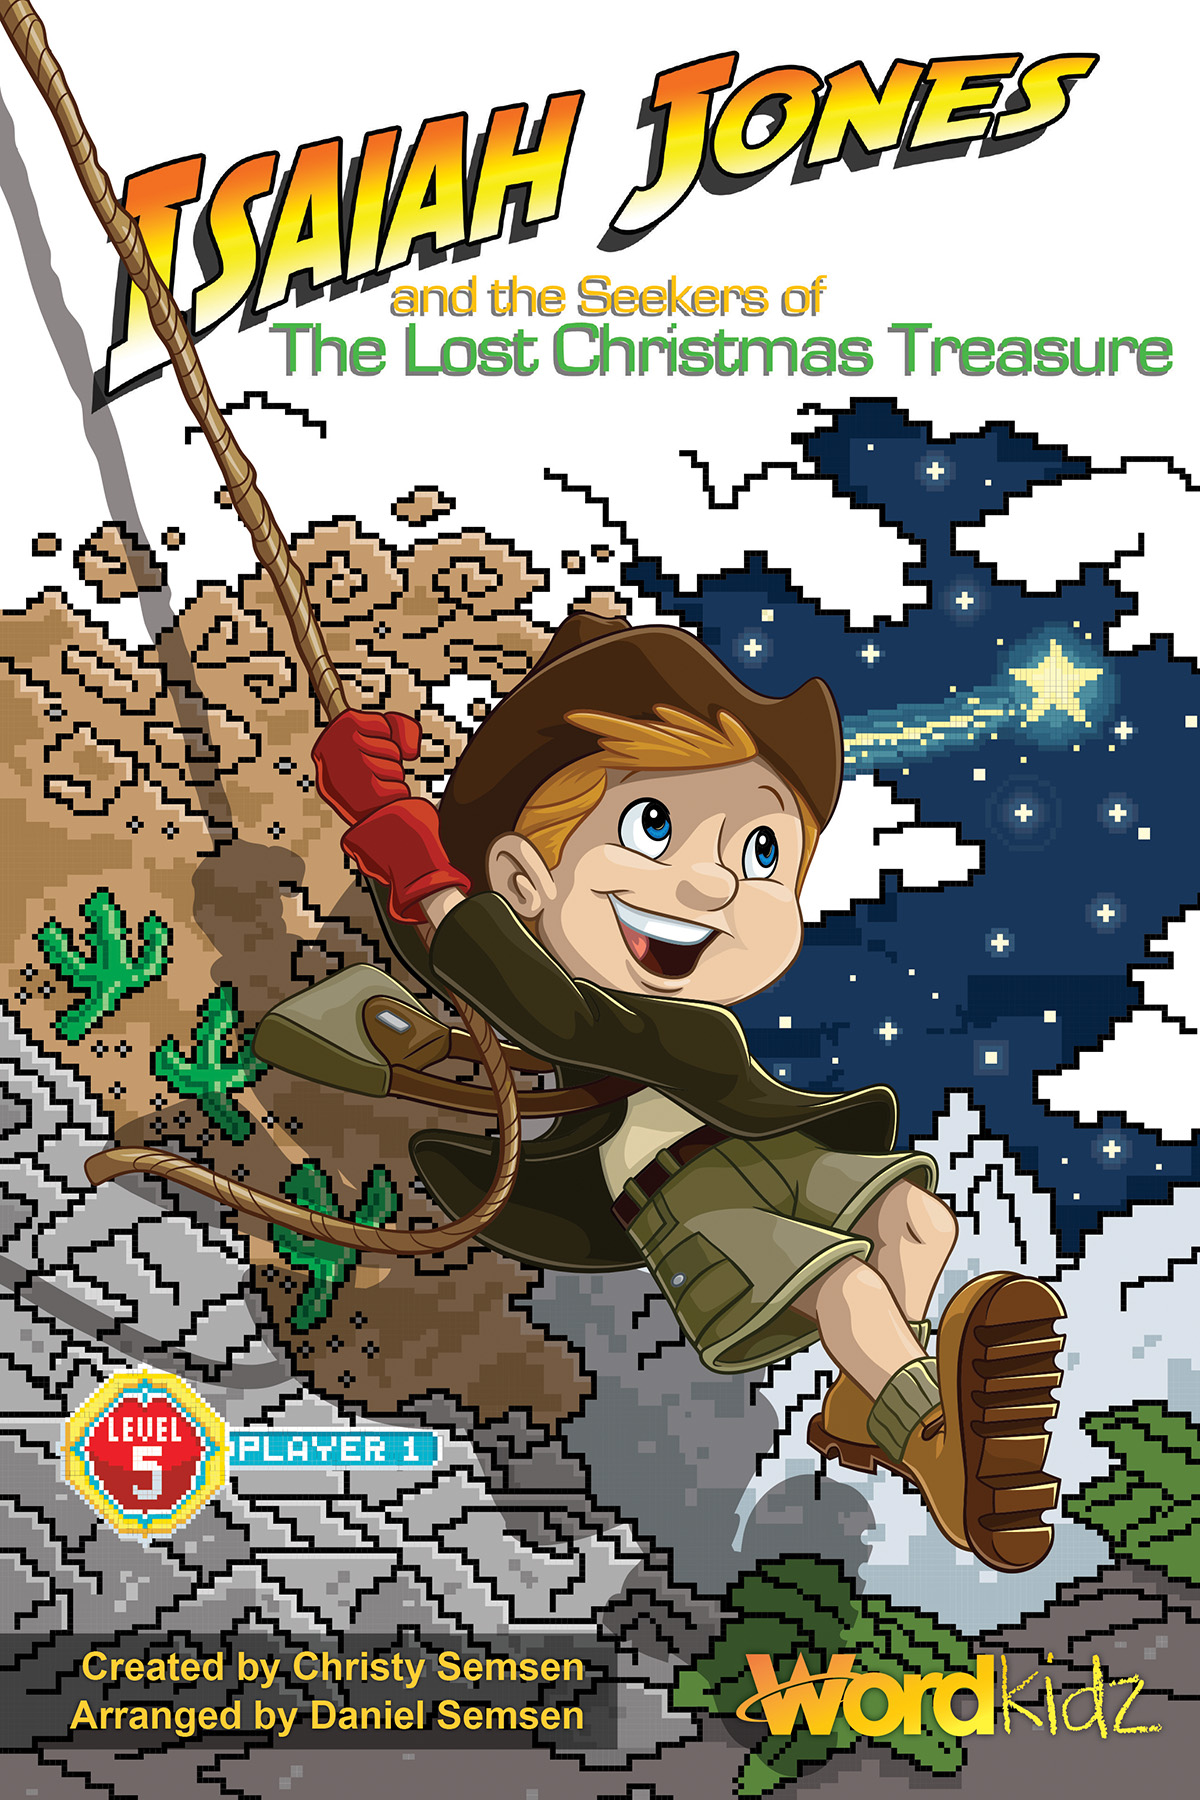 Isaiah Jones and the Seekers of The Lost Christmas Treasure